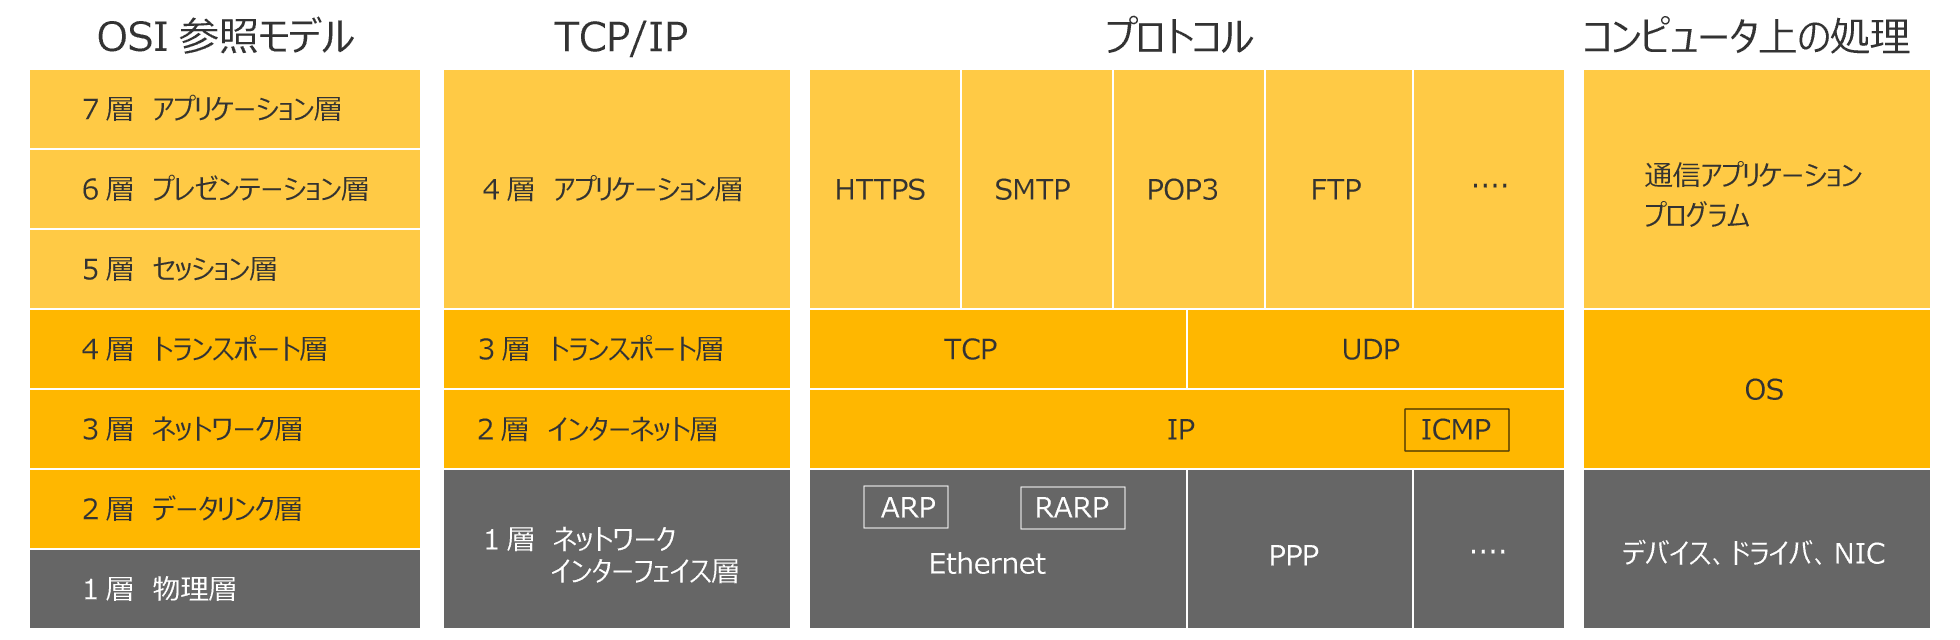 OSI参照モデルとTCP/IPの関係図